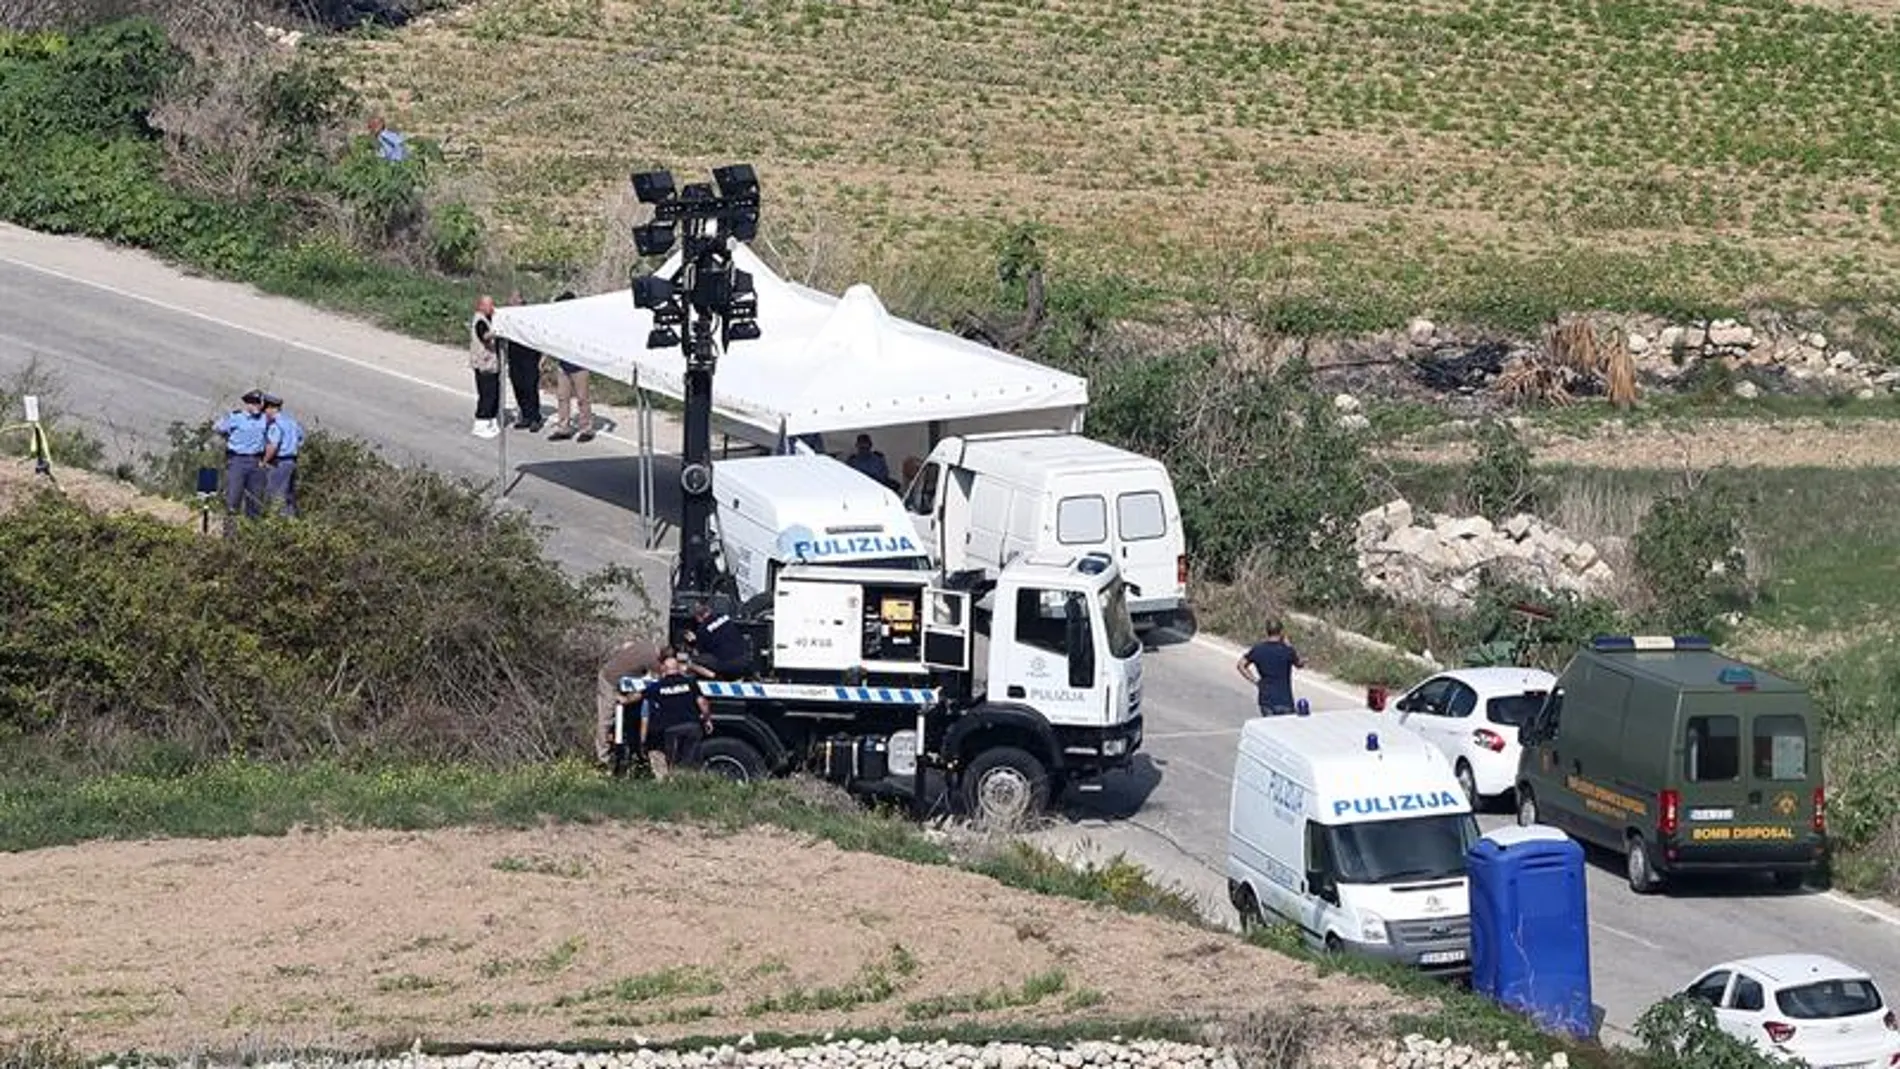 Vista general del lugar donde falleció la periodista maltesa Daphne Caruana Galizia al explotar su coche